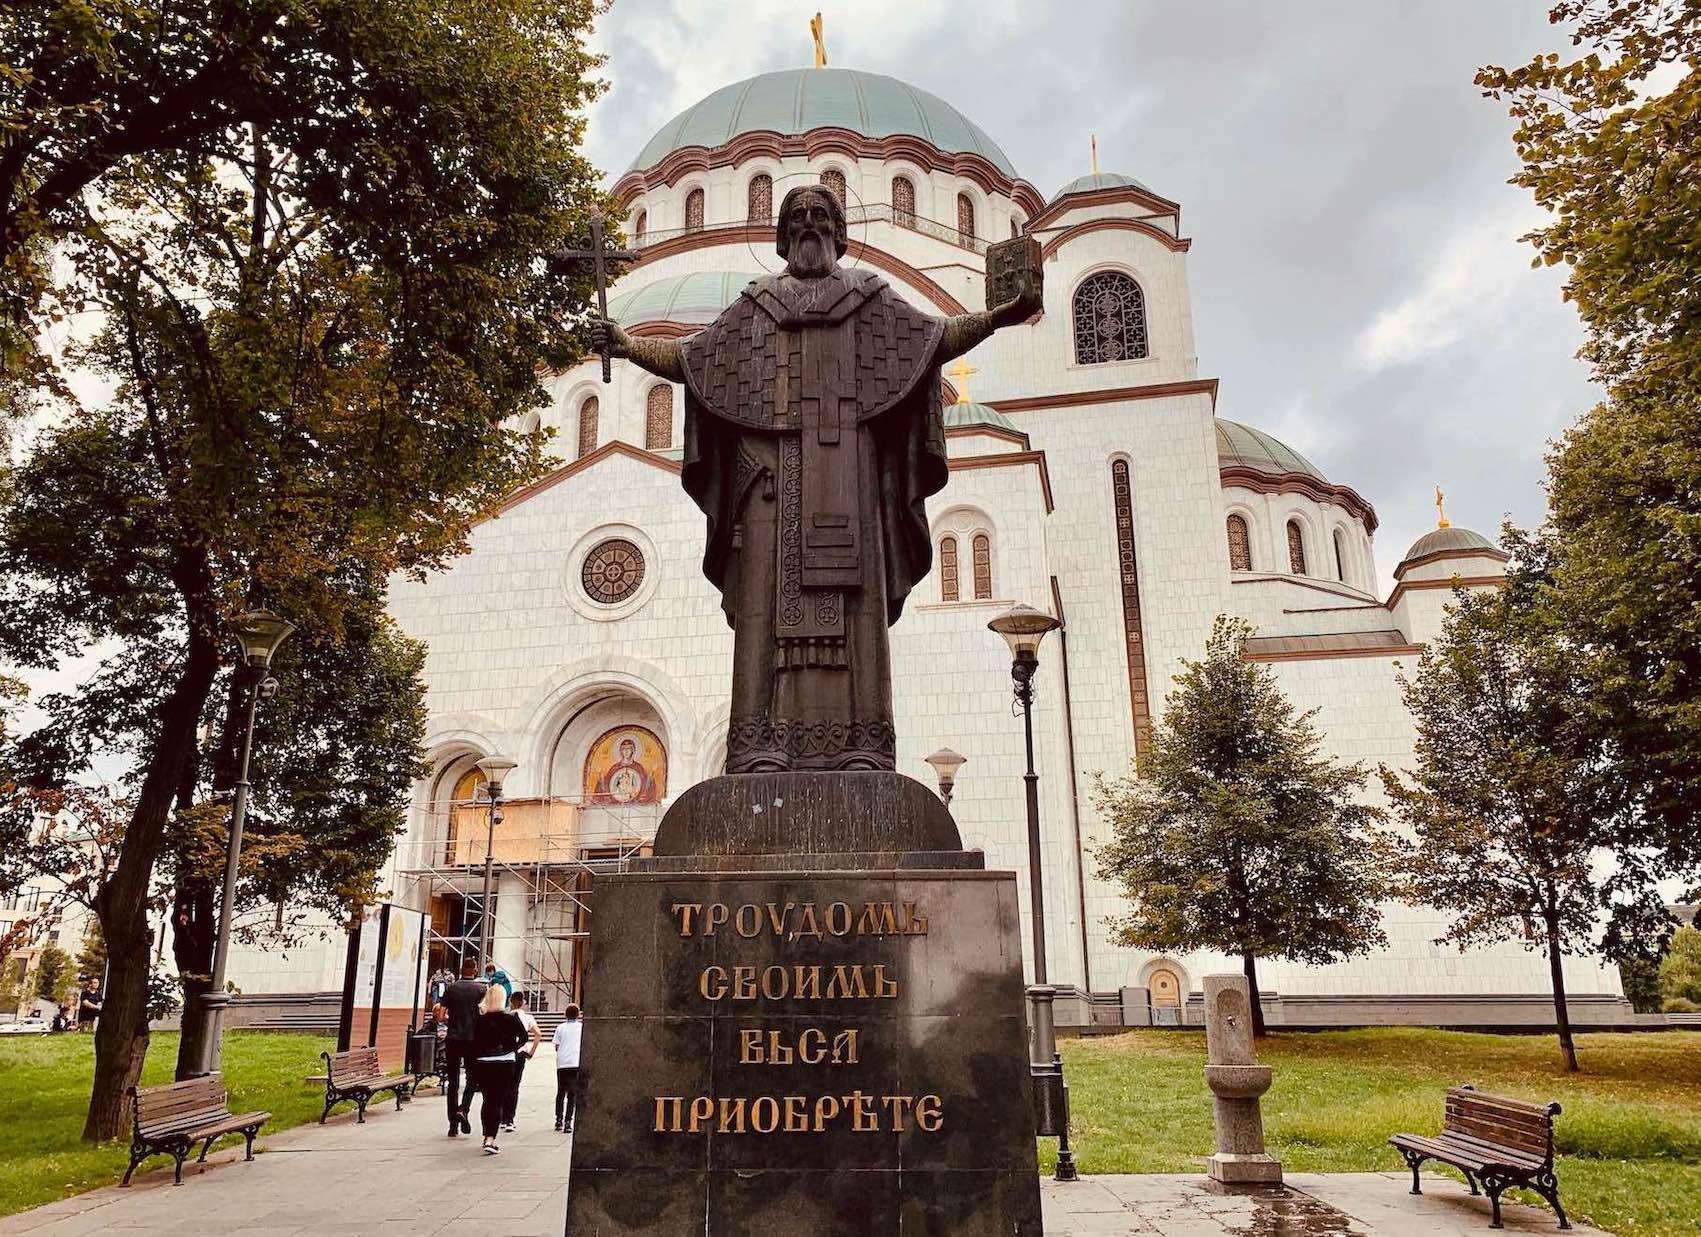 Visit the Church of St Sava Belgrade